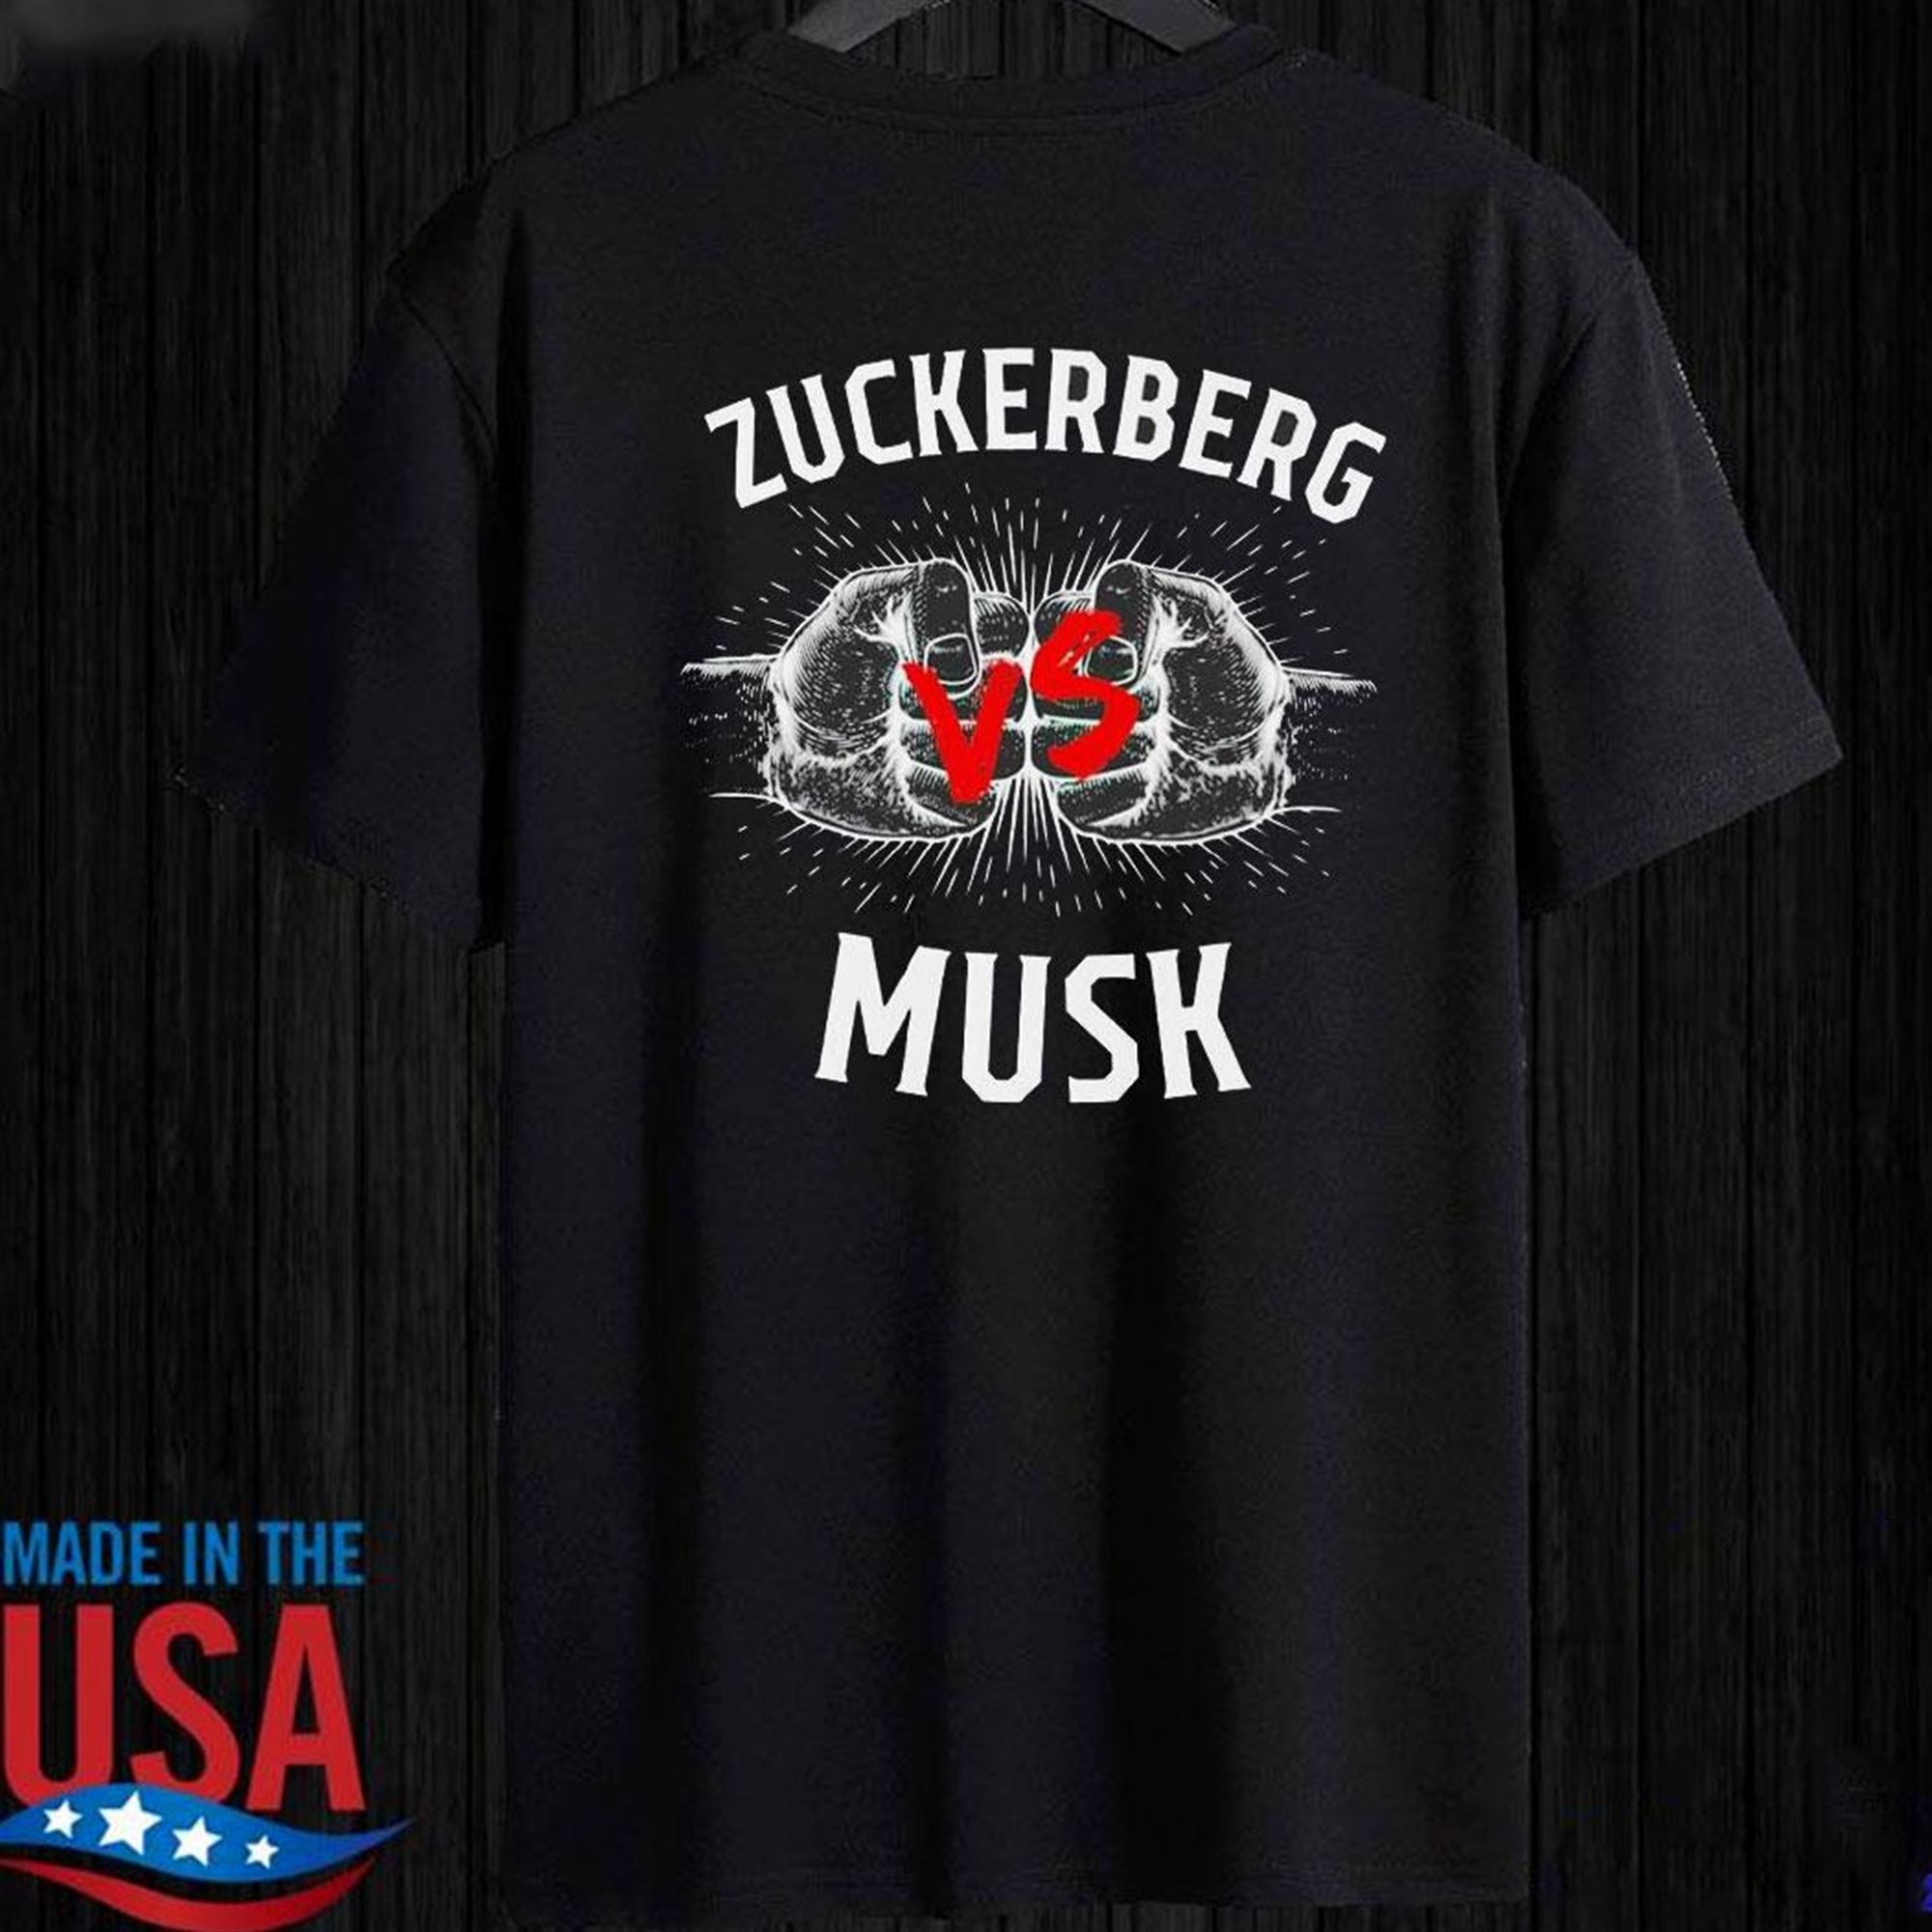 Zuckerberg Vs Musk Get Your Epic T-shirt Hoodie